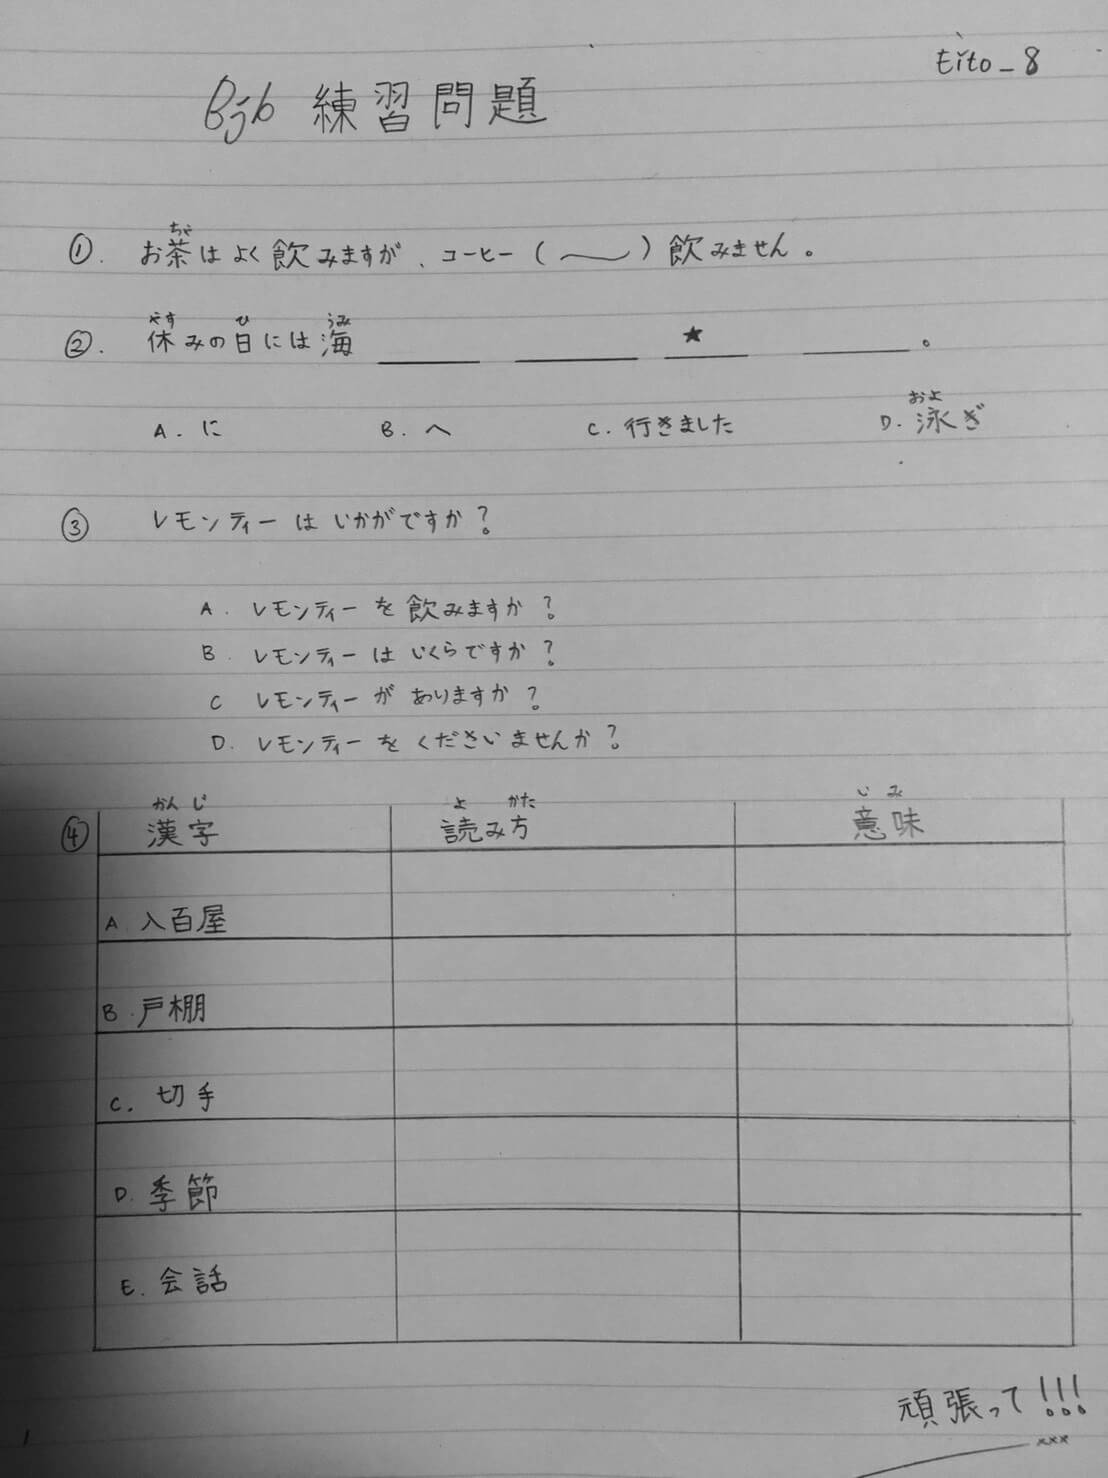 Contoh Soal Bahasa Jepang Kelas 12 Rismax